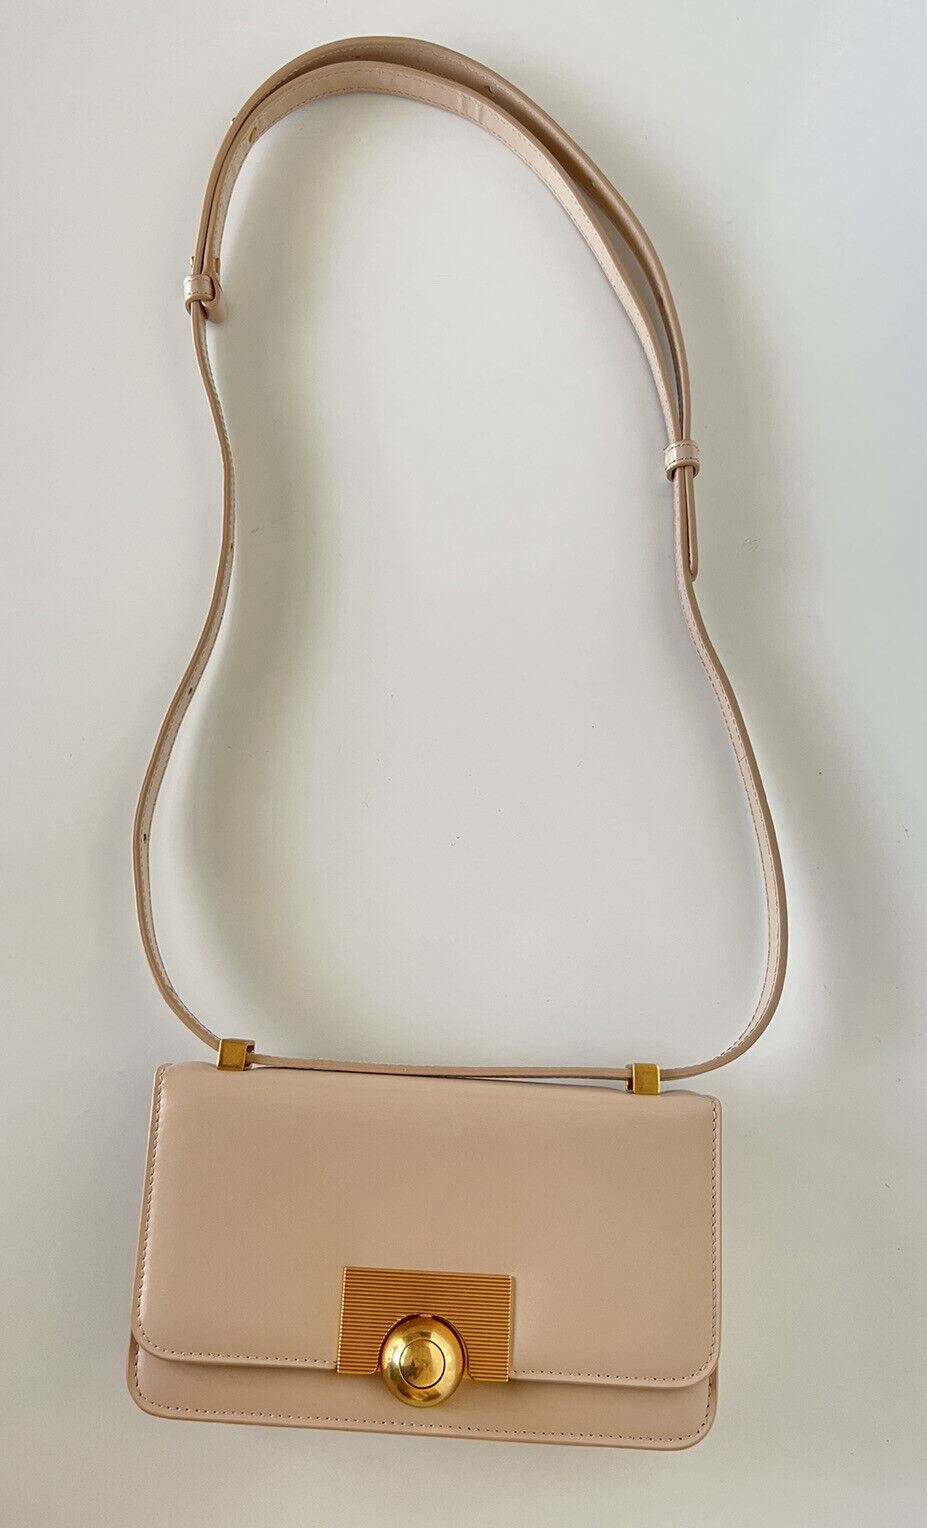 NWT $2100 Bottega Veneta Saddle Leather Mini Shoulder Bag 587222 Made in Italy